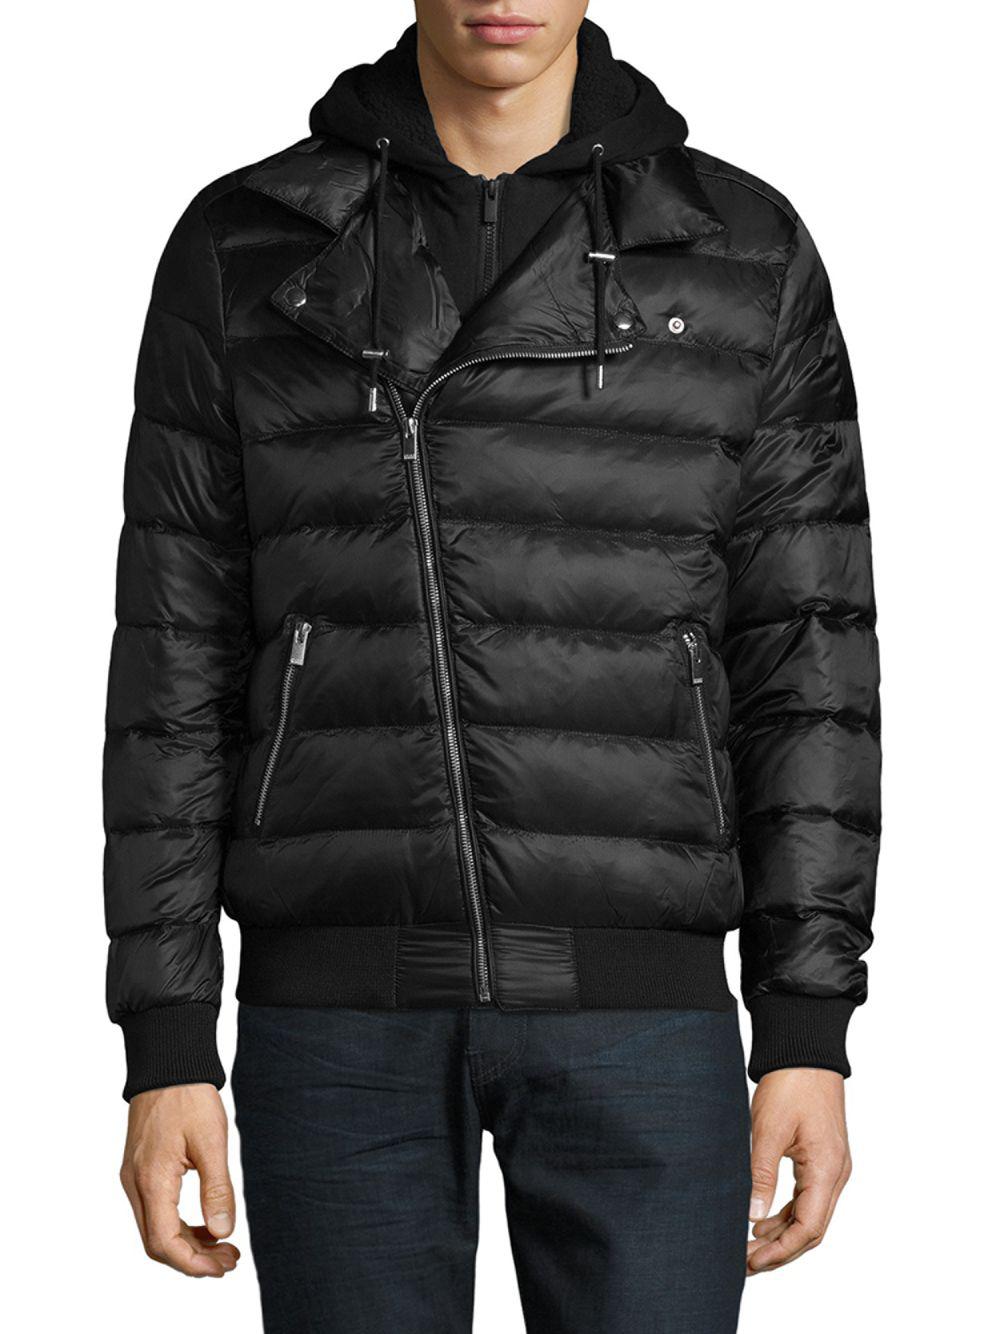 The Kooples Sport Synthetic Puffer Jacket in Black for Men - Lyst